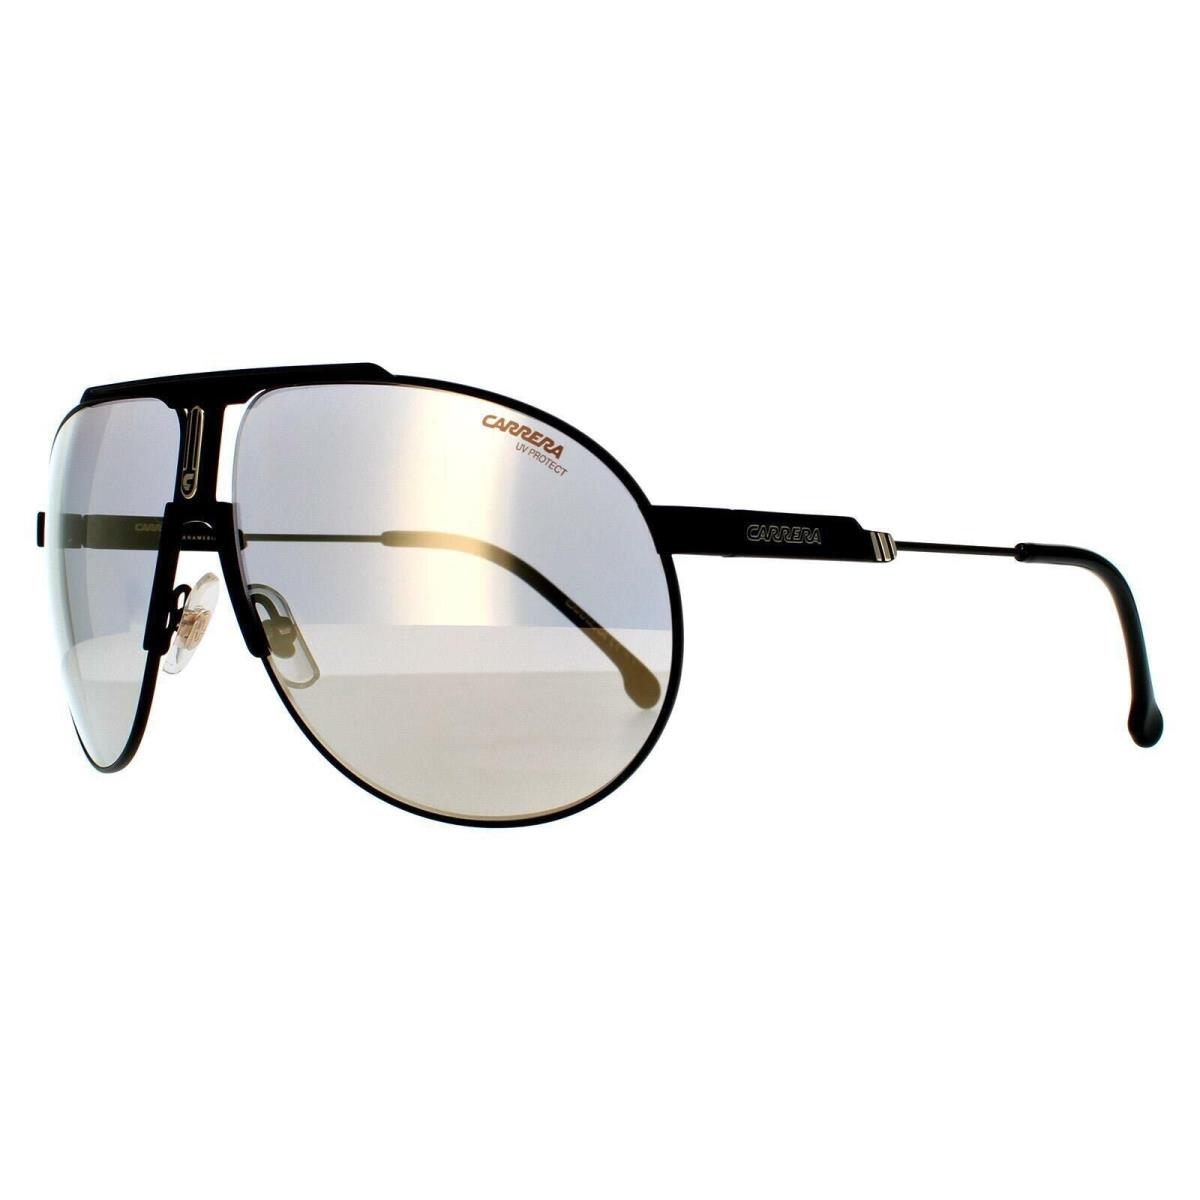 Carrera Sunglasses Panamerika65 003 JO Matte Black Gray Bronze Mirror